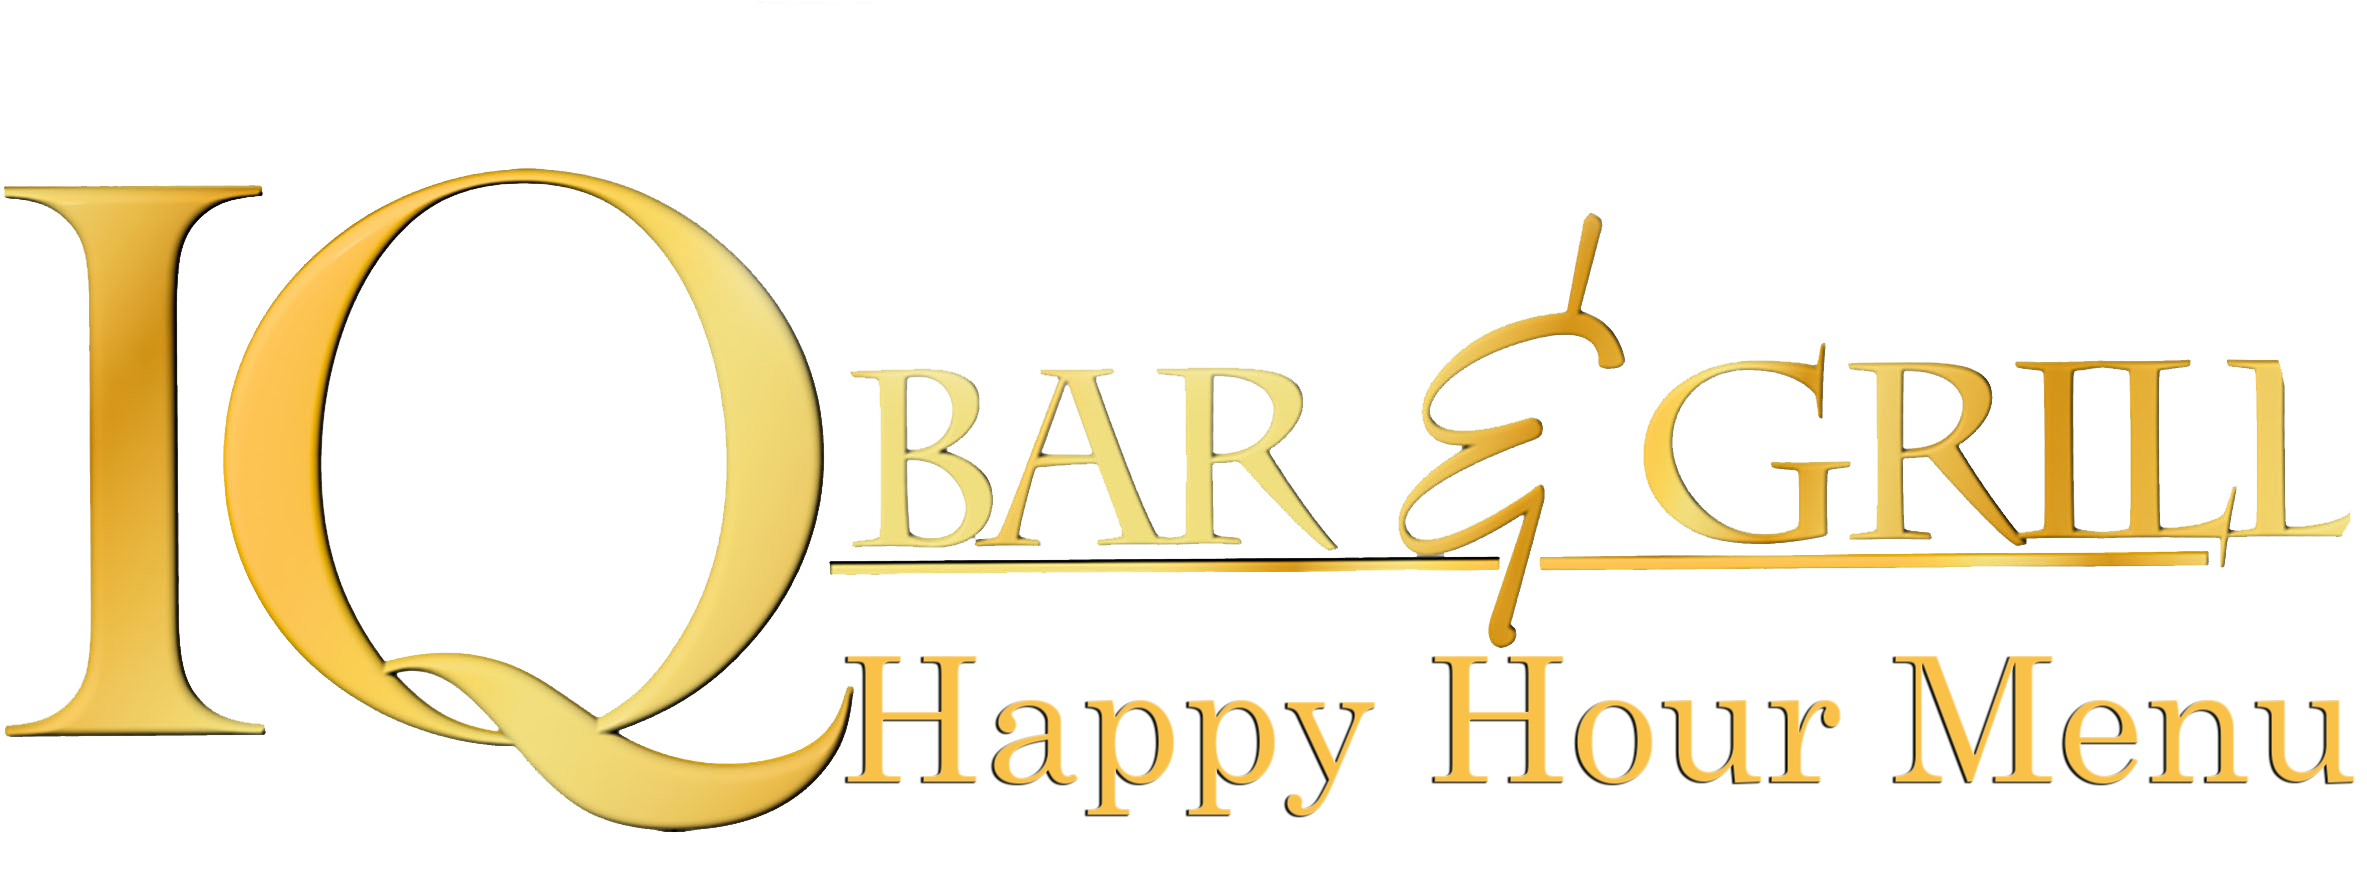 Happy Hour menu | IQ Bar & Grill